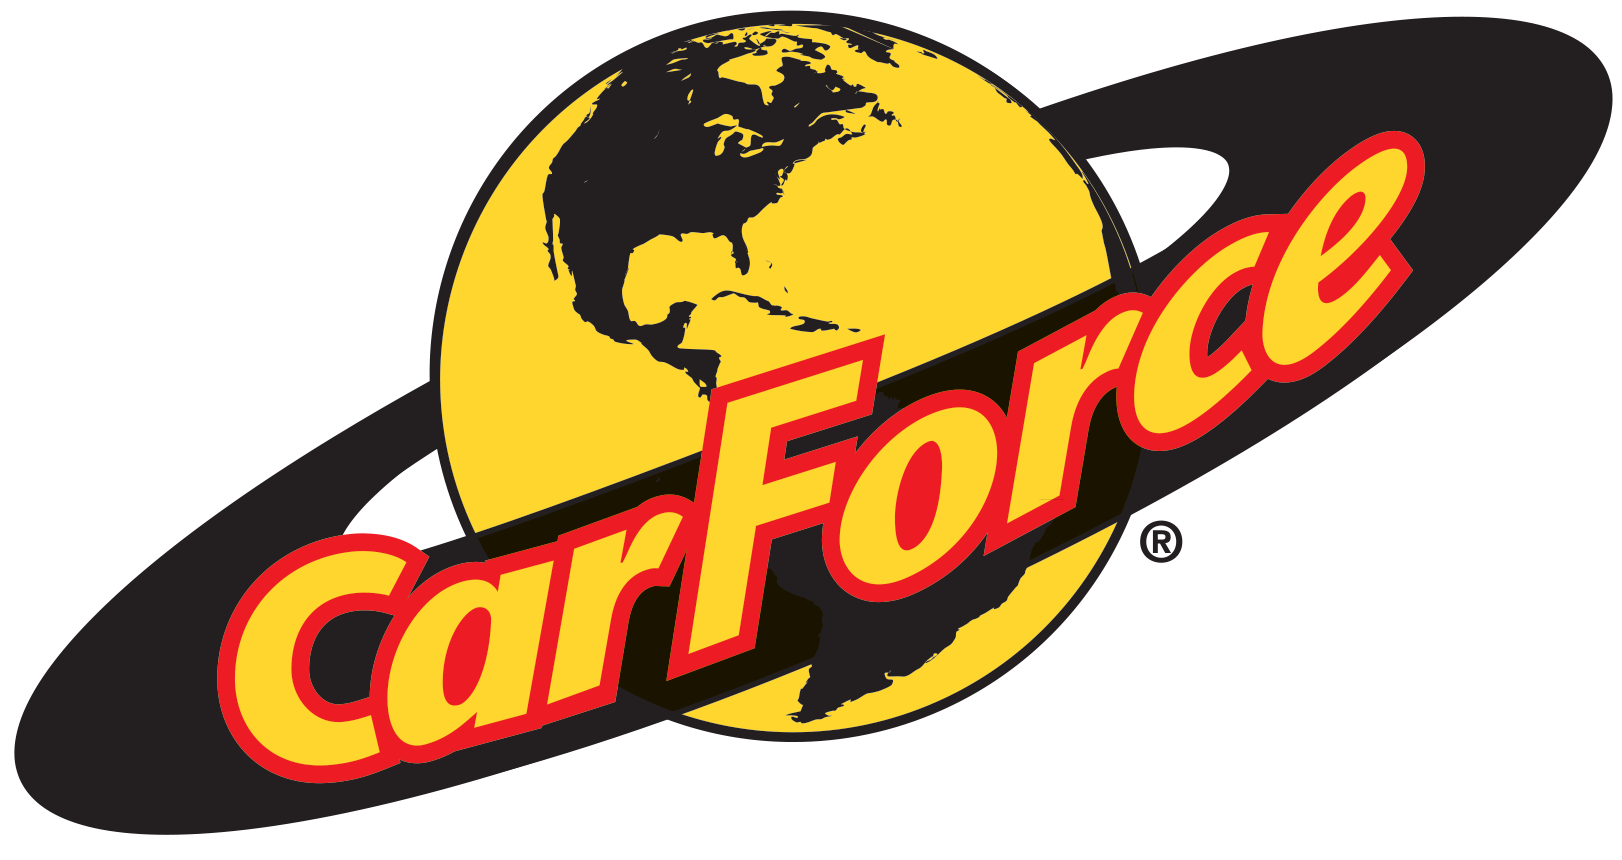 CarForce